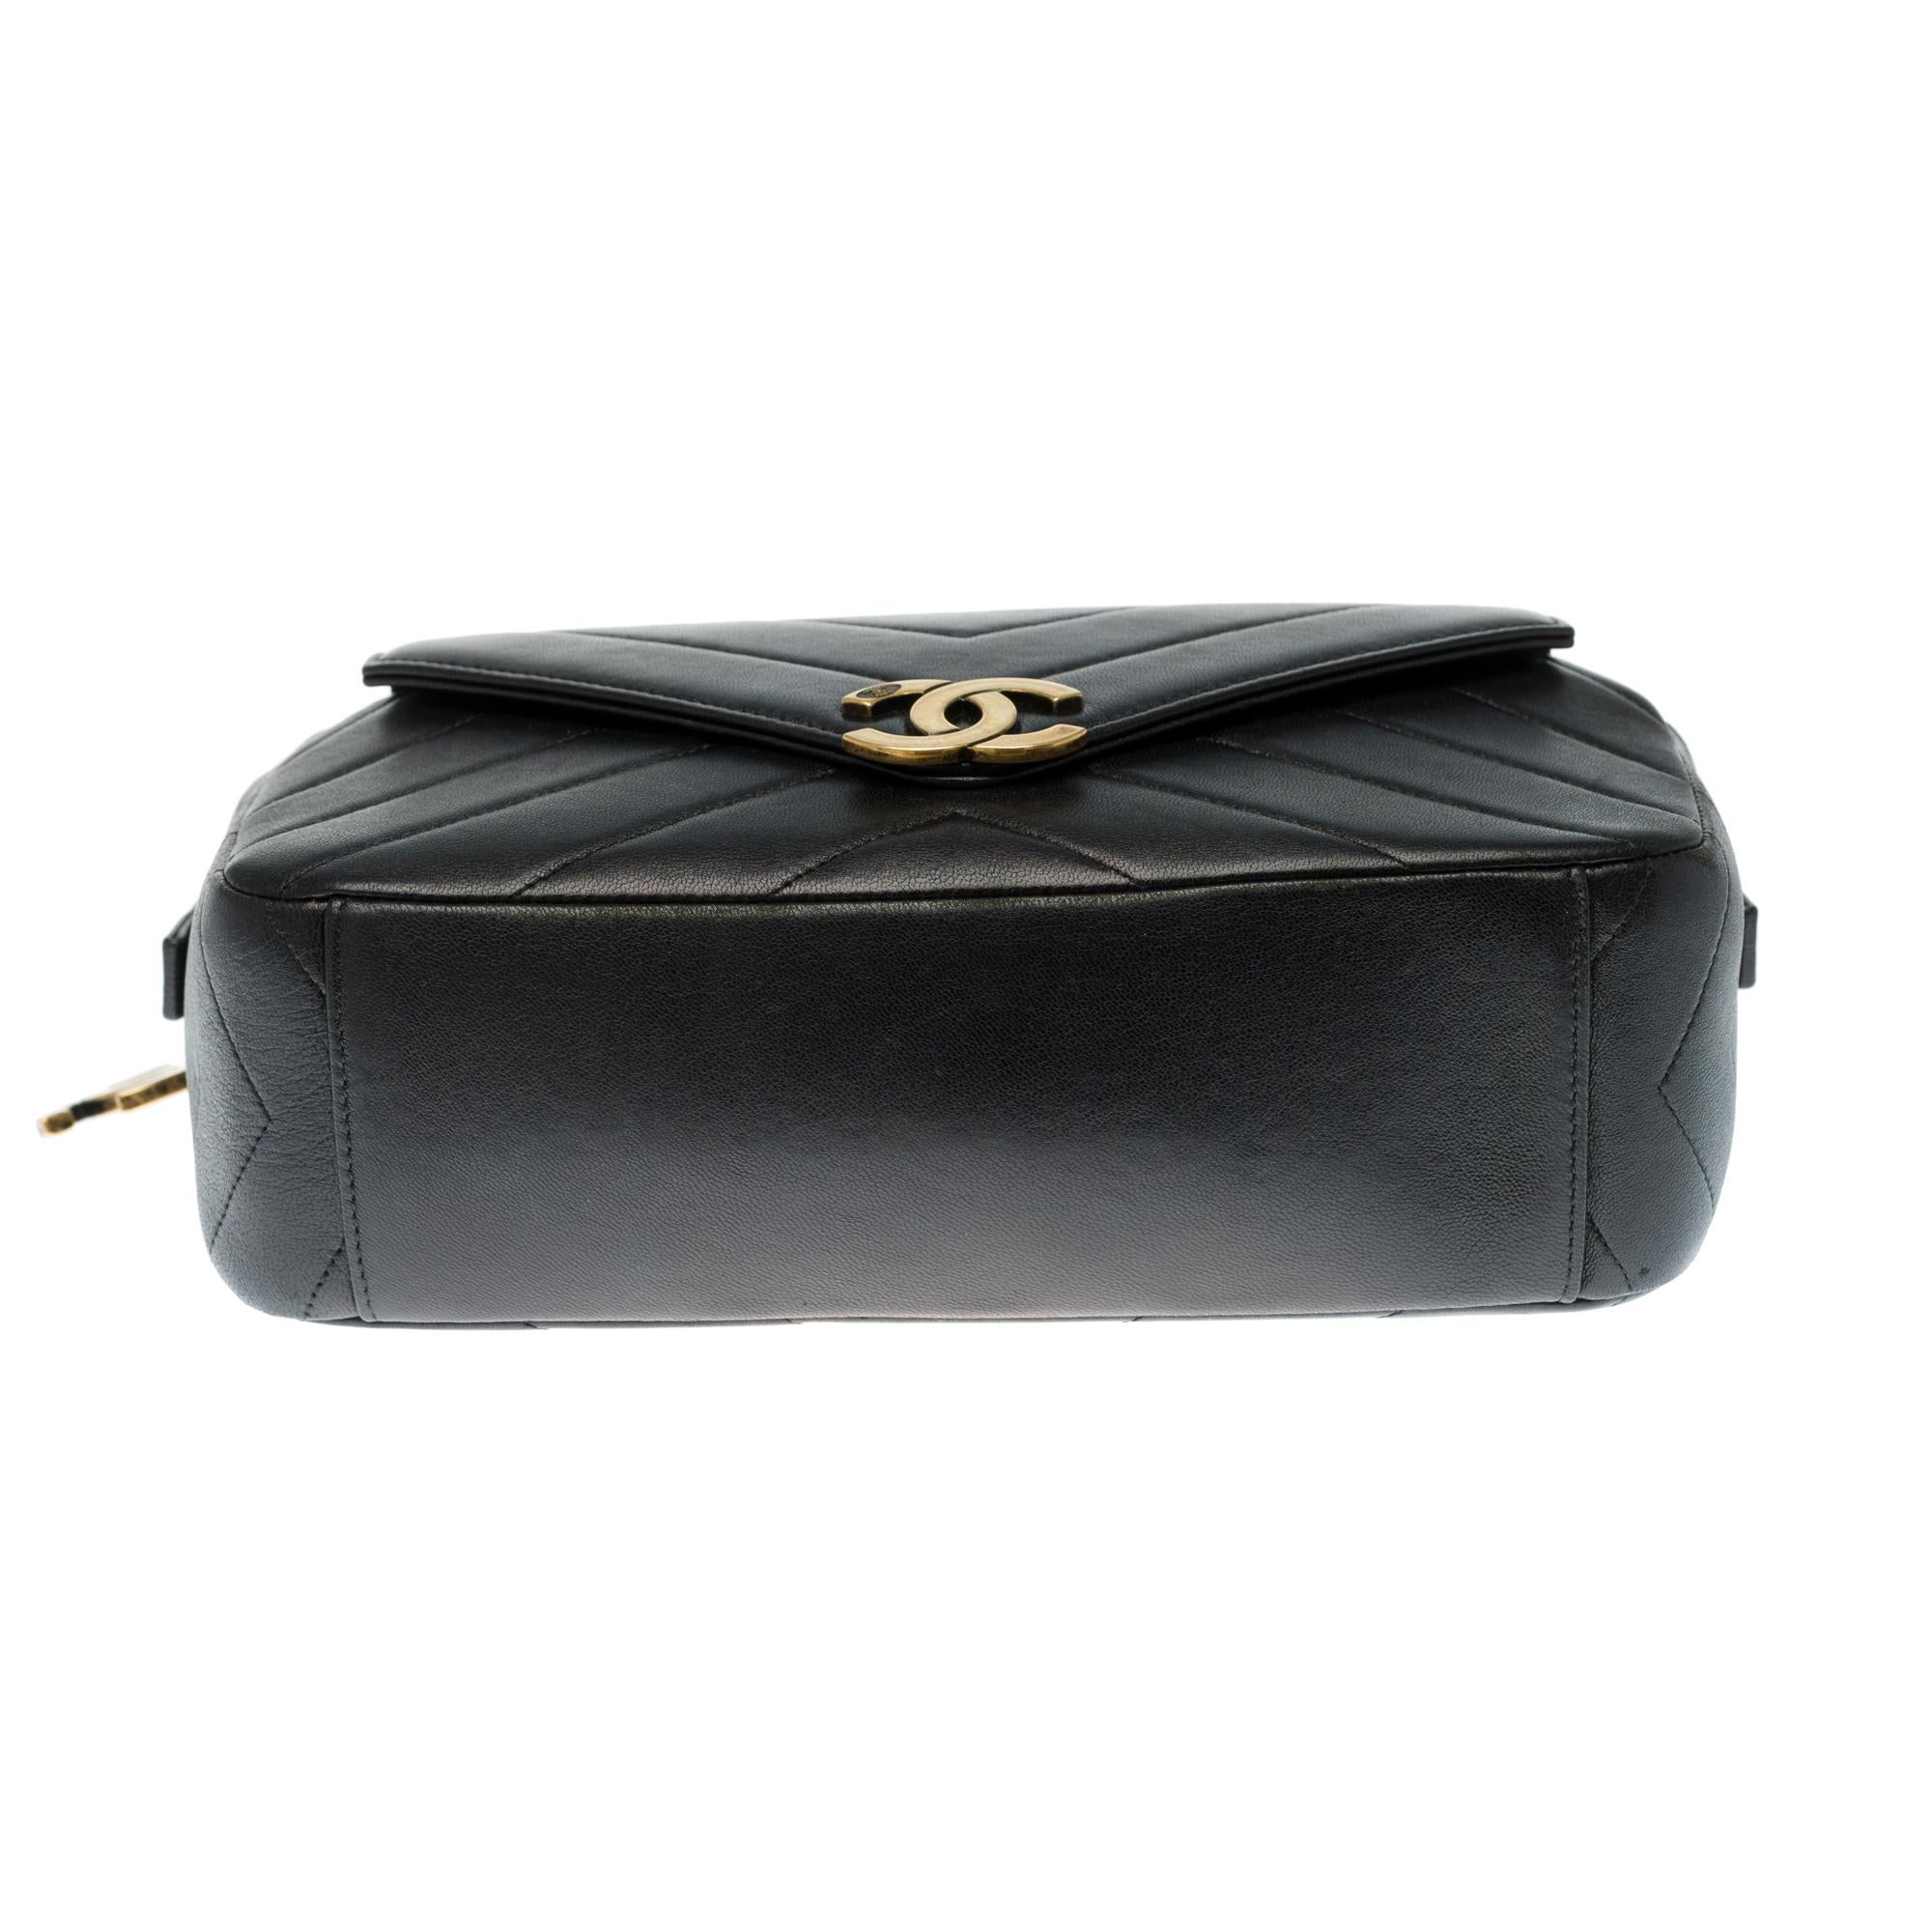 Amazing Chanel Camera shoulder bag in black herringbone leather, GHW 3